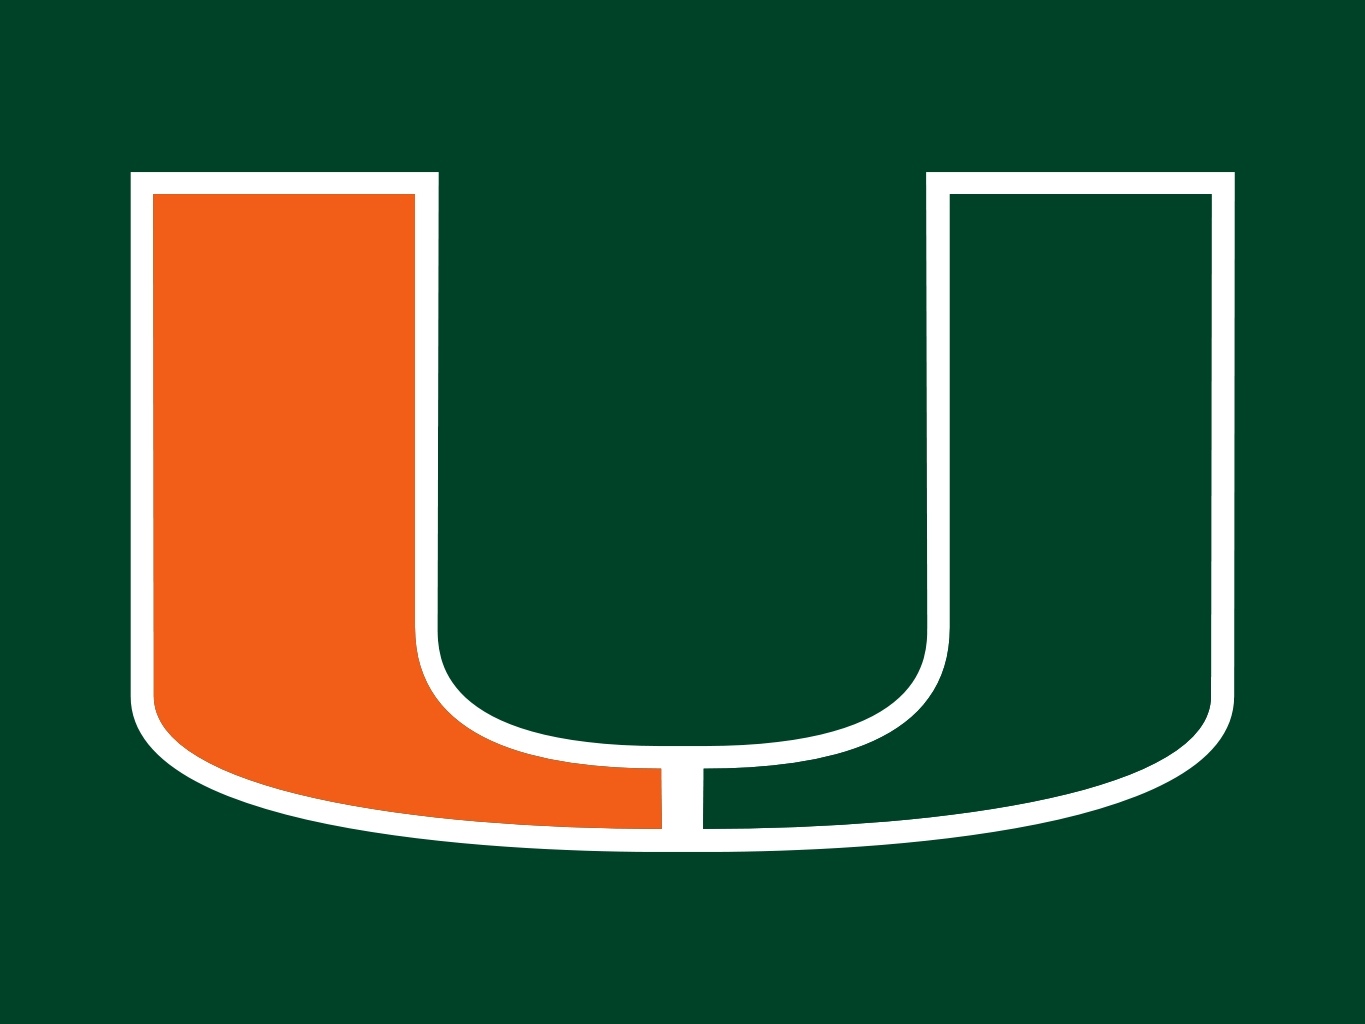 Miami (FL) Hurricanes | NCAA Football Wiki | FANDOM powered by Wikia